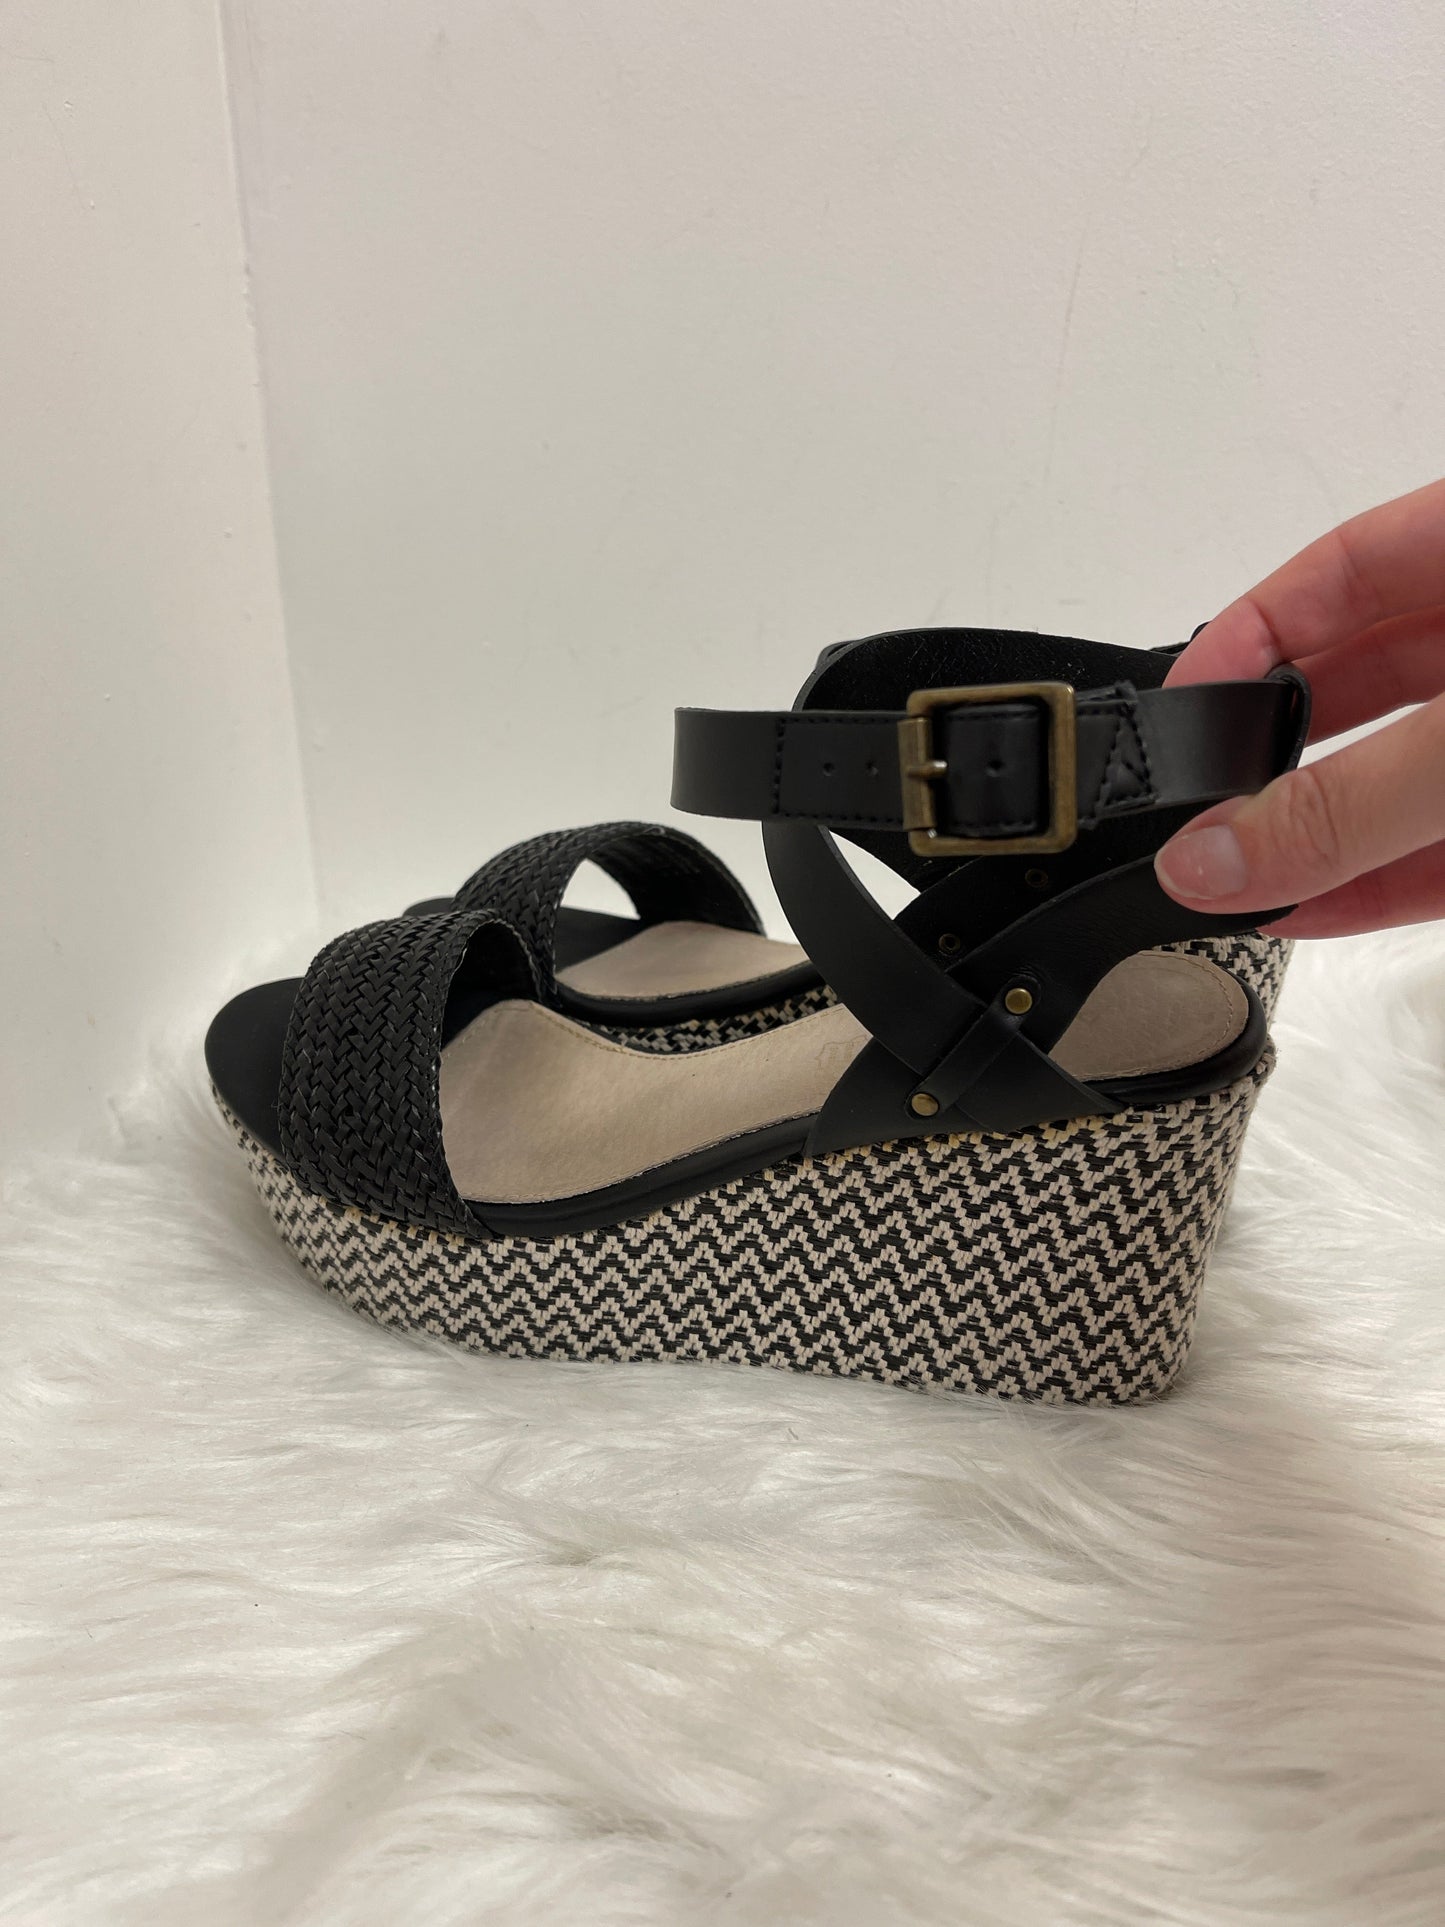 Black & White Sandals Heels Wedge Aldo, Size 8.5